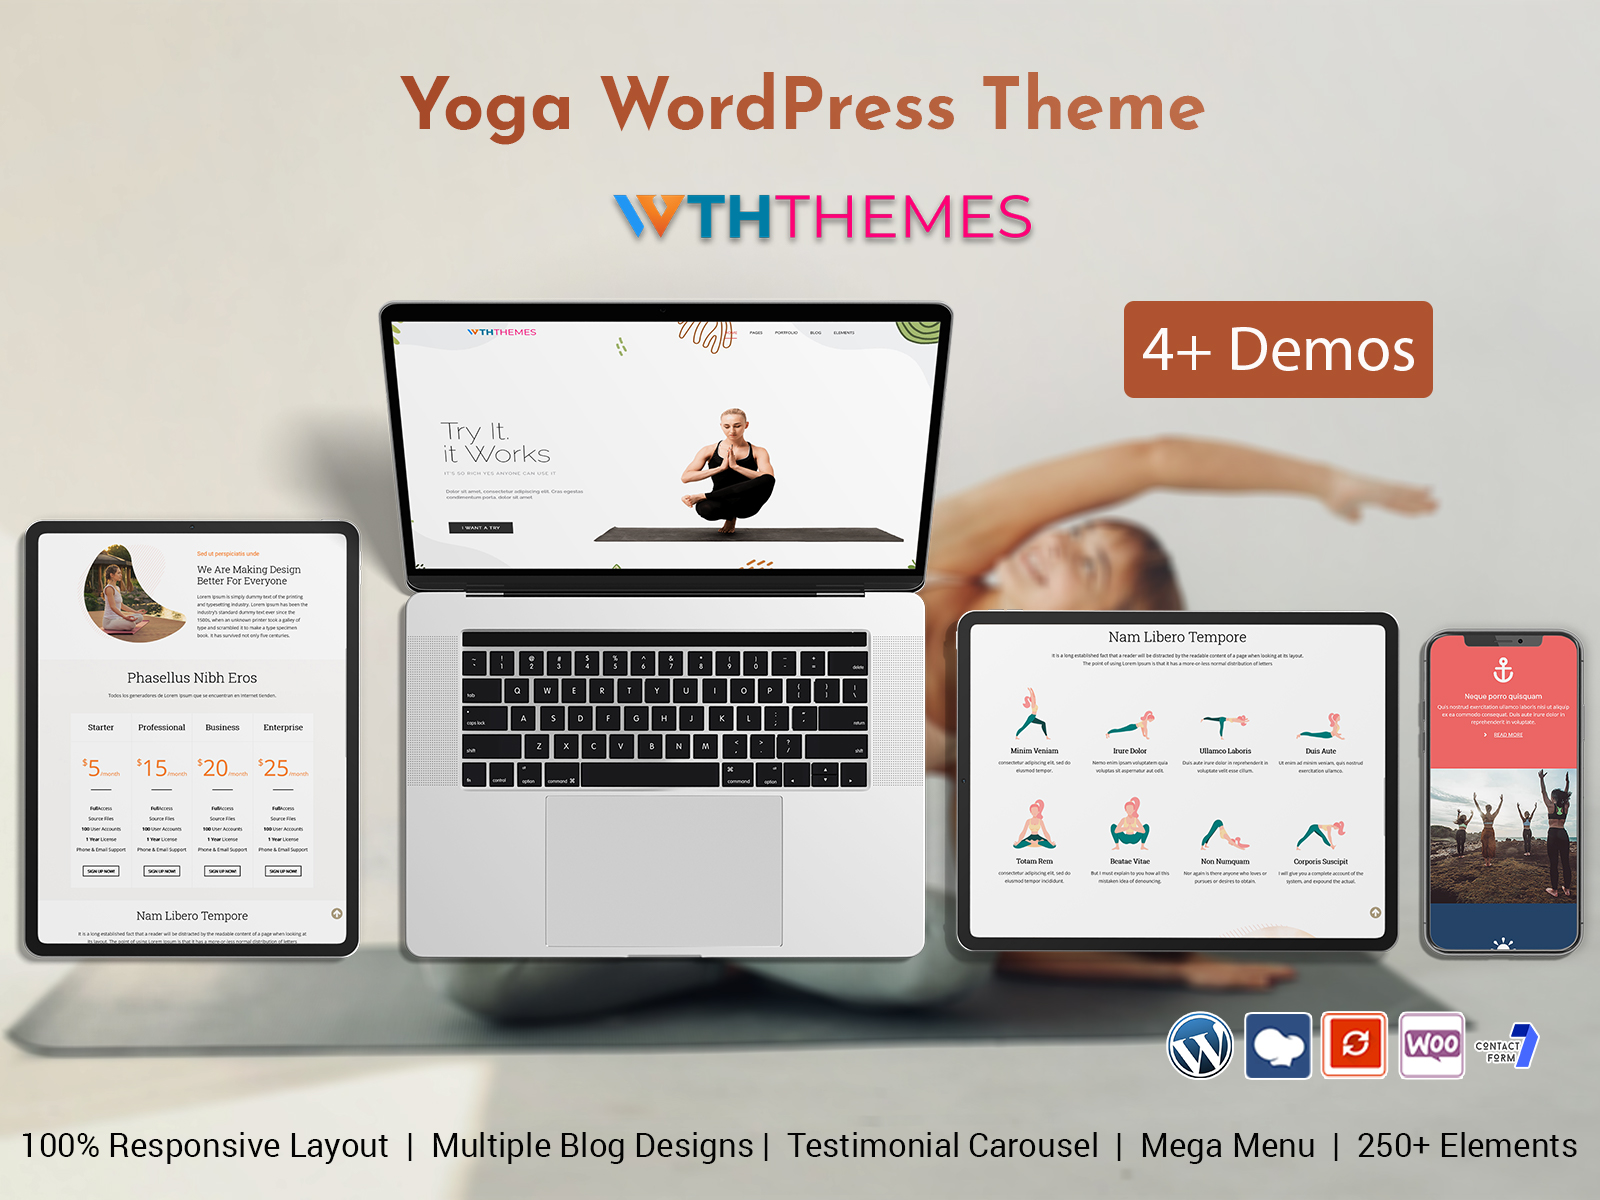 Enhance Your Online Class With Yoga WordPress Theme